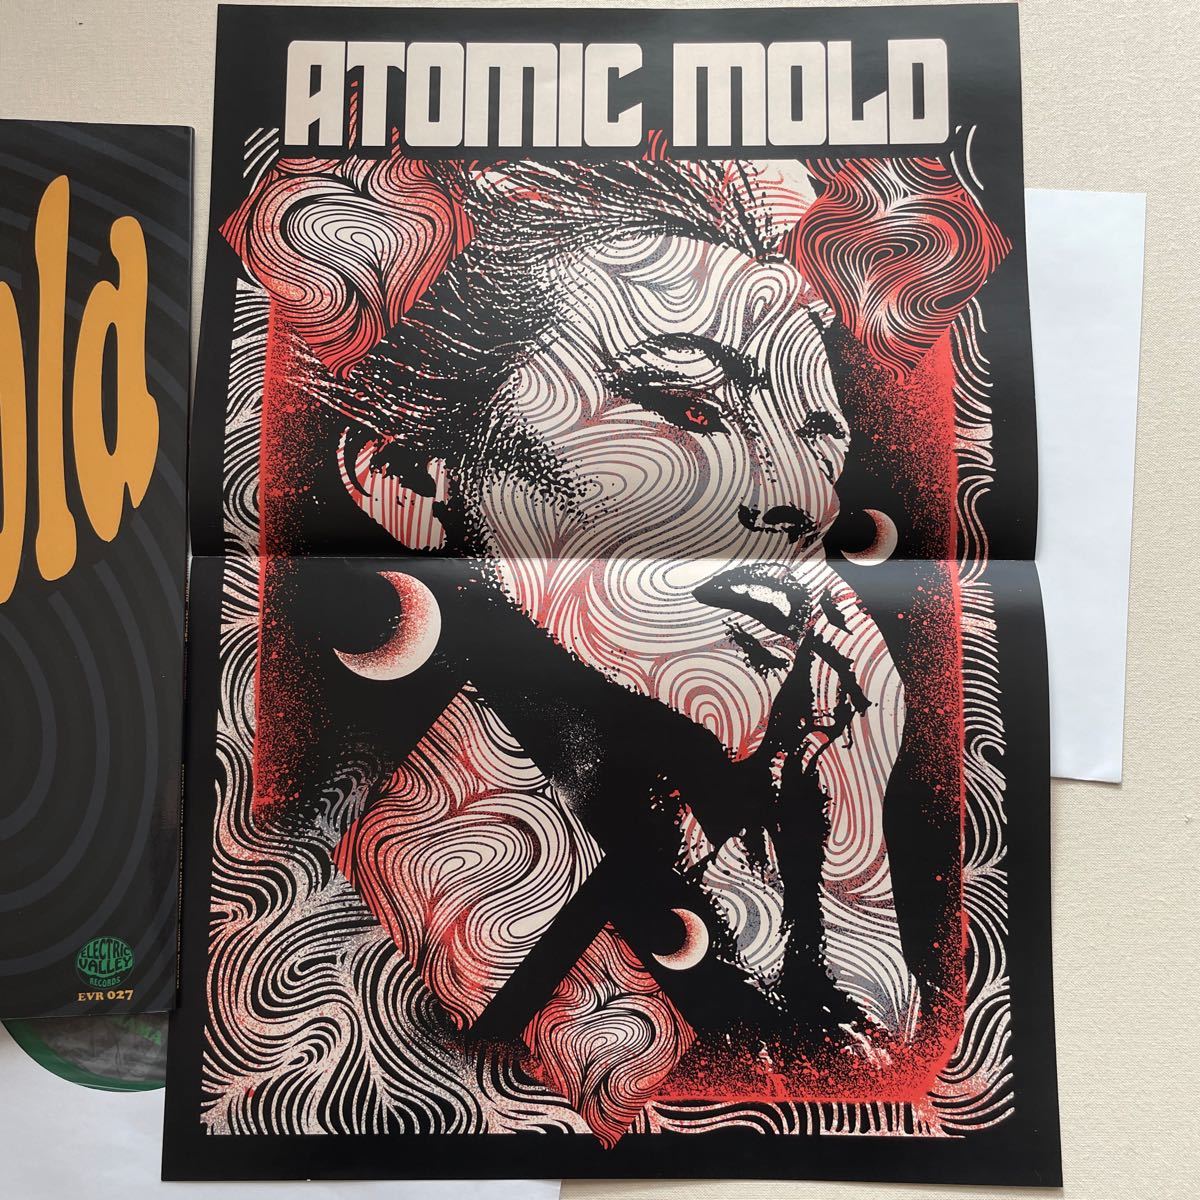 ARTEAGA / ATOMIC MOLD split LP ストーナーロック ドゥームメタル psych acid hard stoner rock doom metal_画像6